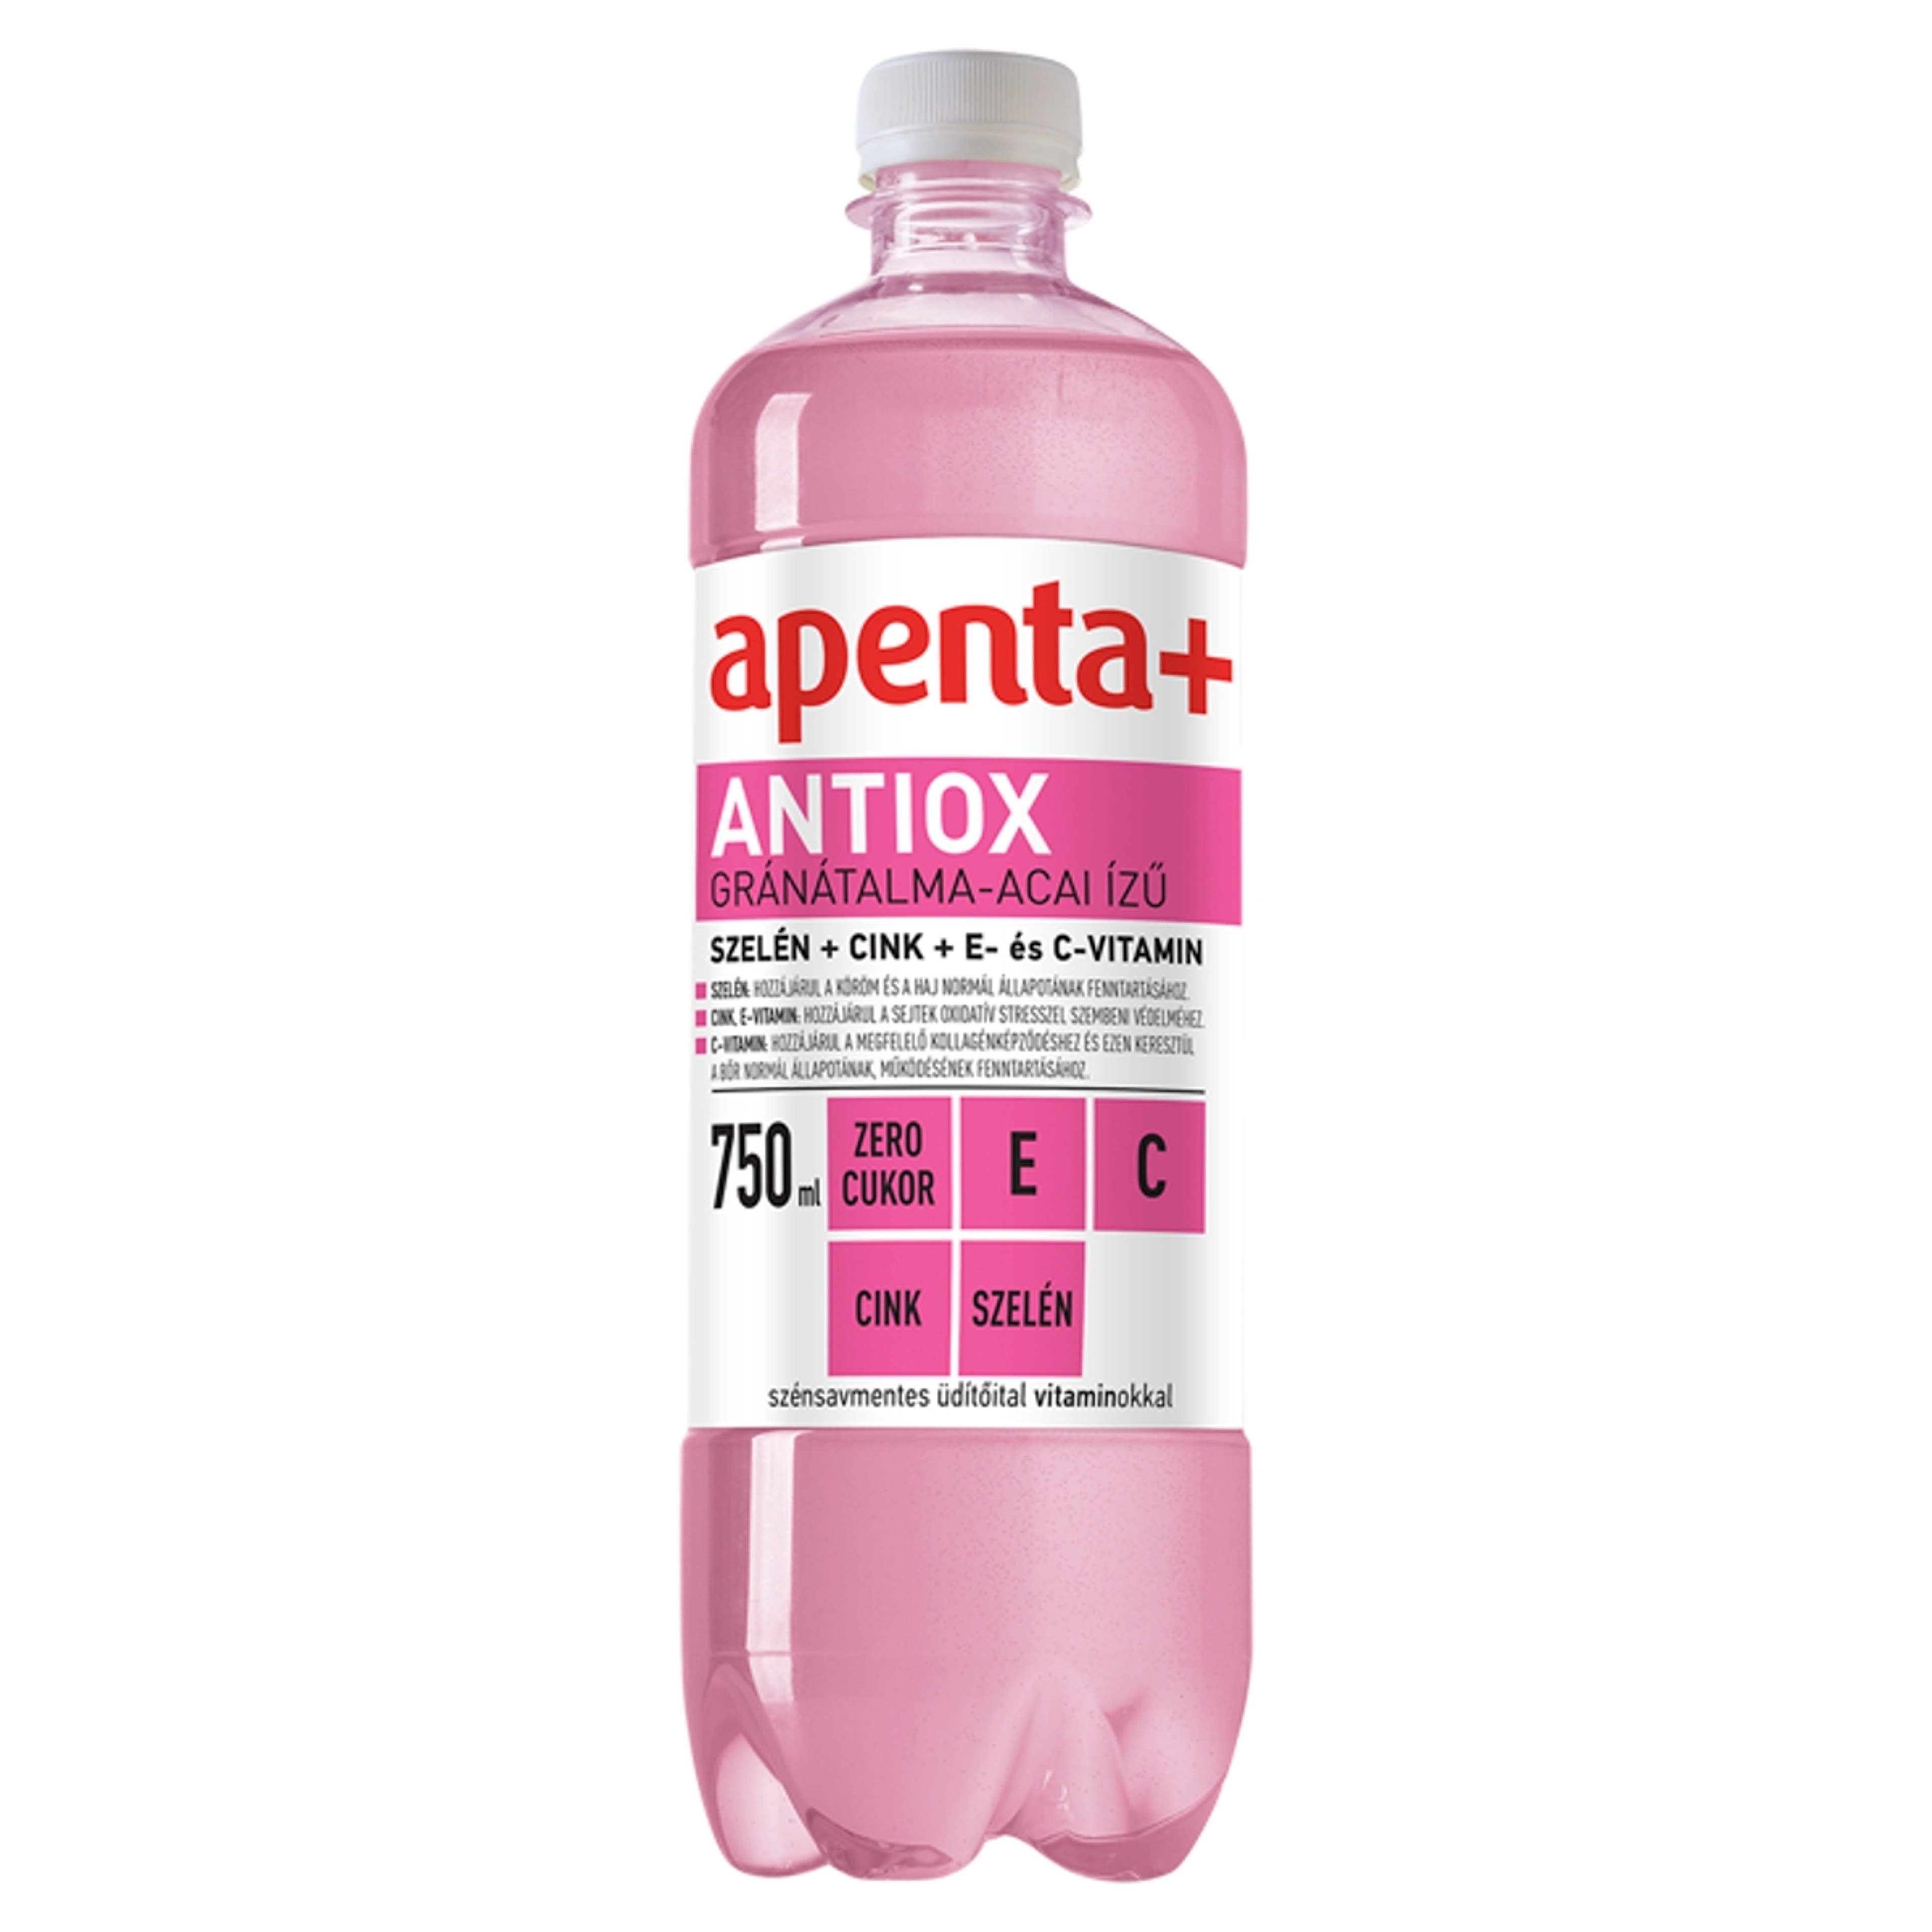 Apenta + antioxidáns - 750 ml-1